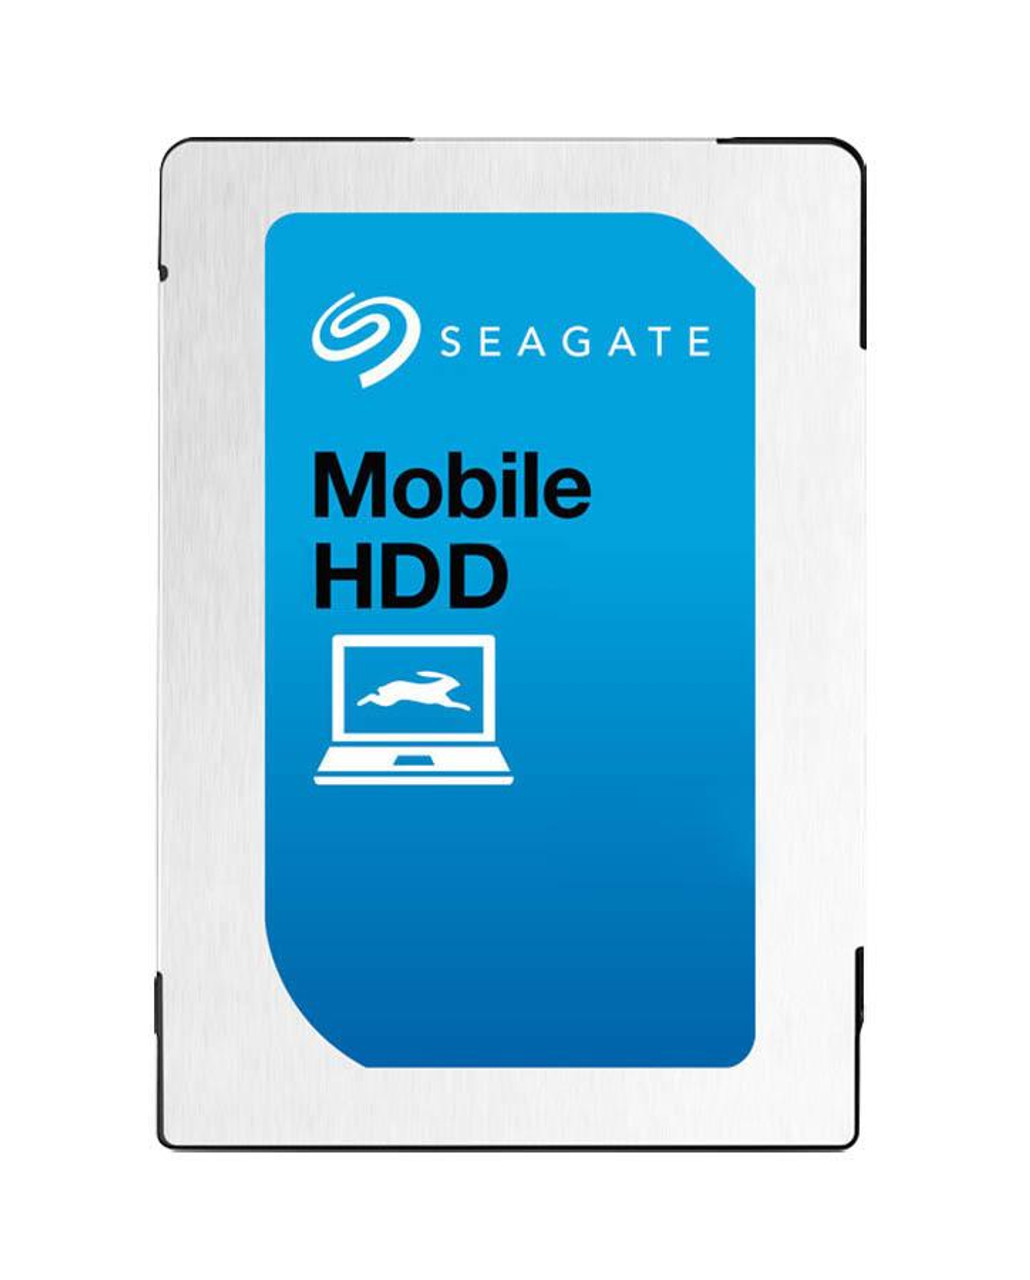 1R8174-125 Seagate Mobile HDD 2TB 5400RPM SATA 6Gbps 128MB Cache 2.5-inch Internal Hard Drive